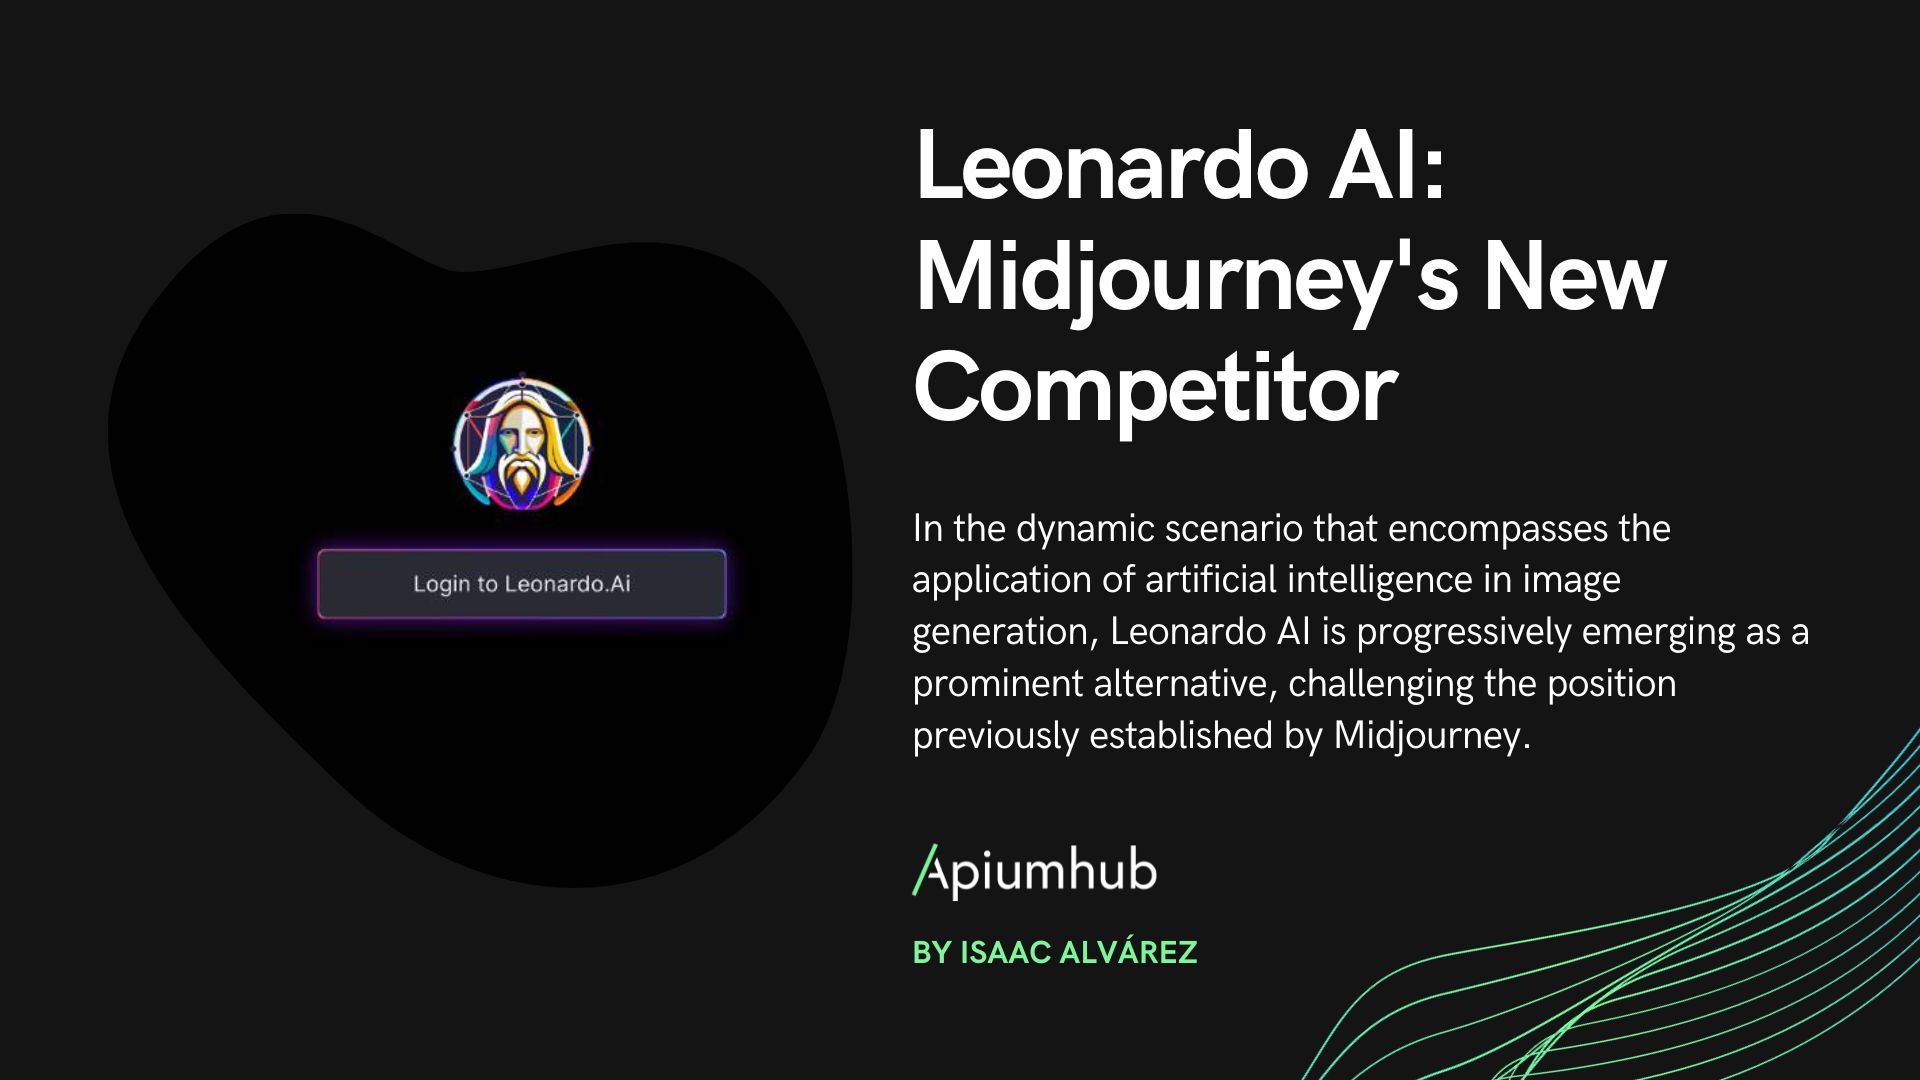 Leonardo AI: Midjourney's new competitor